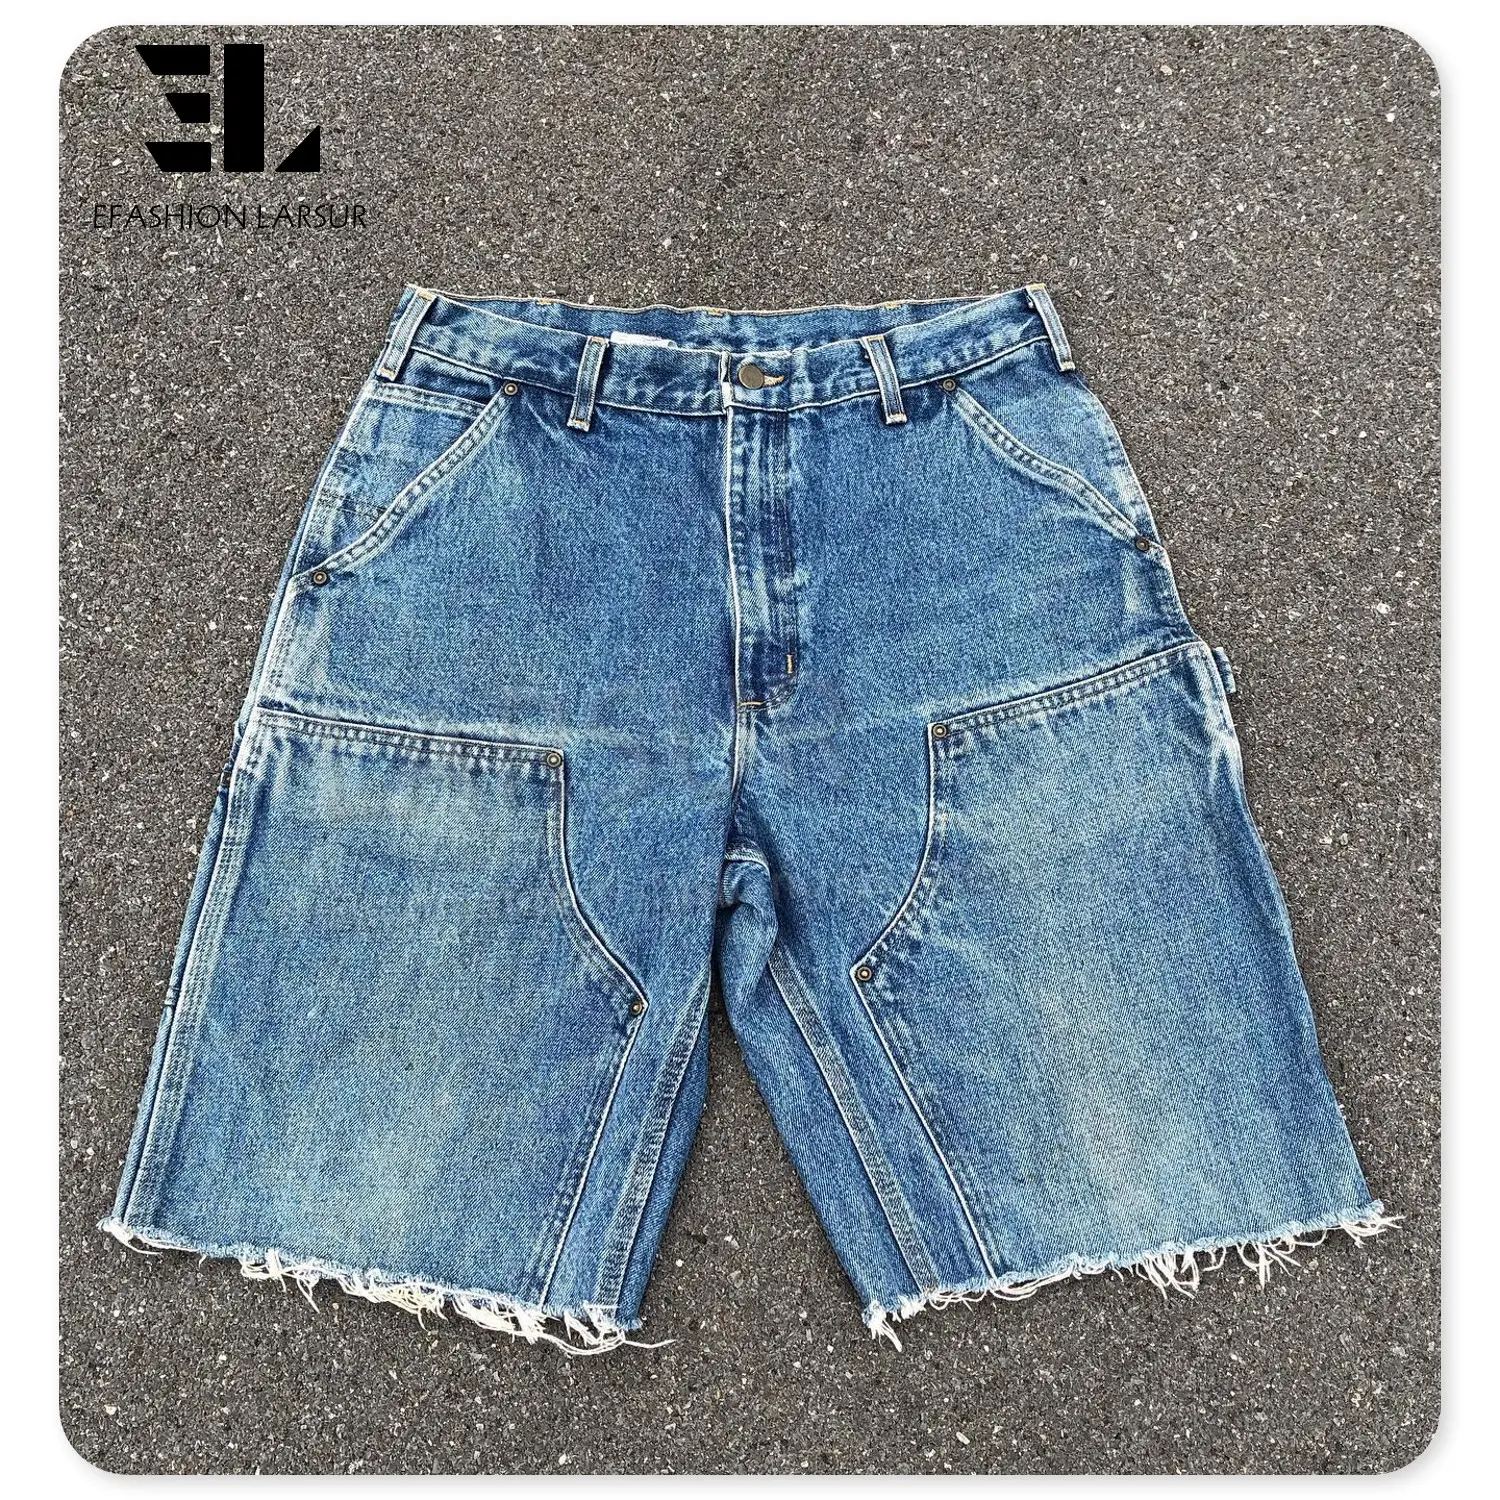 LARSUR Custom factory distress wash baggy double knee canvas twill denim carpenter cargo shorts jeans jorts work shorts pant men